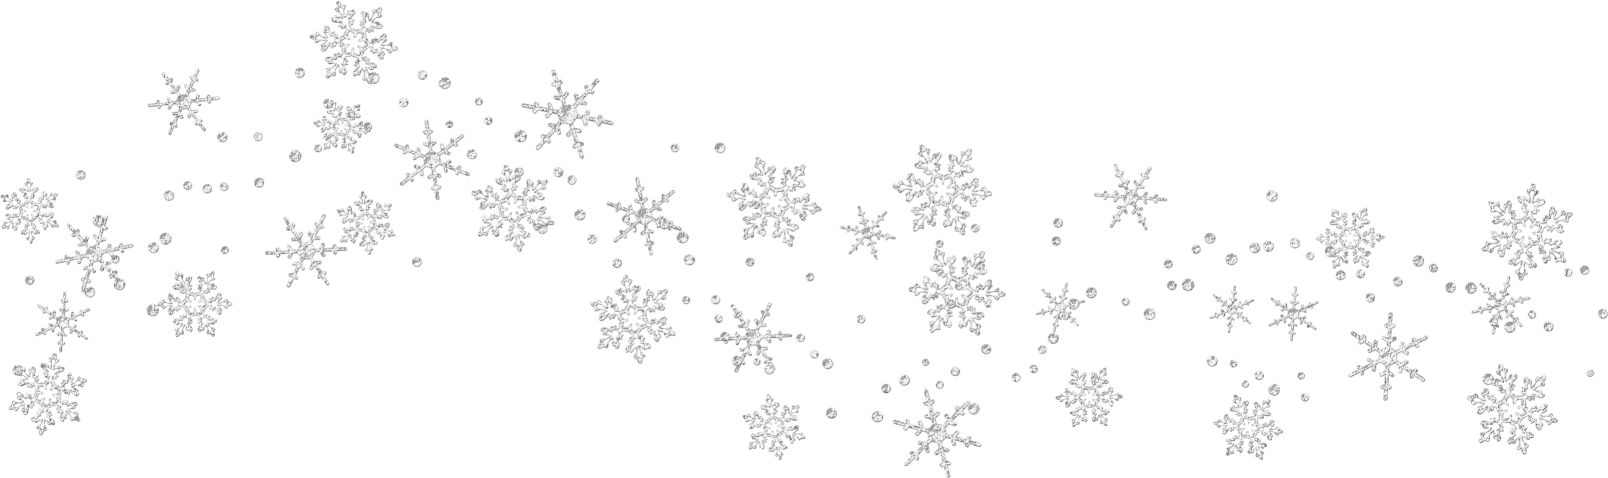 free clip art black and white snow - photo #37